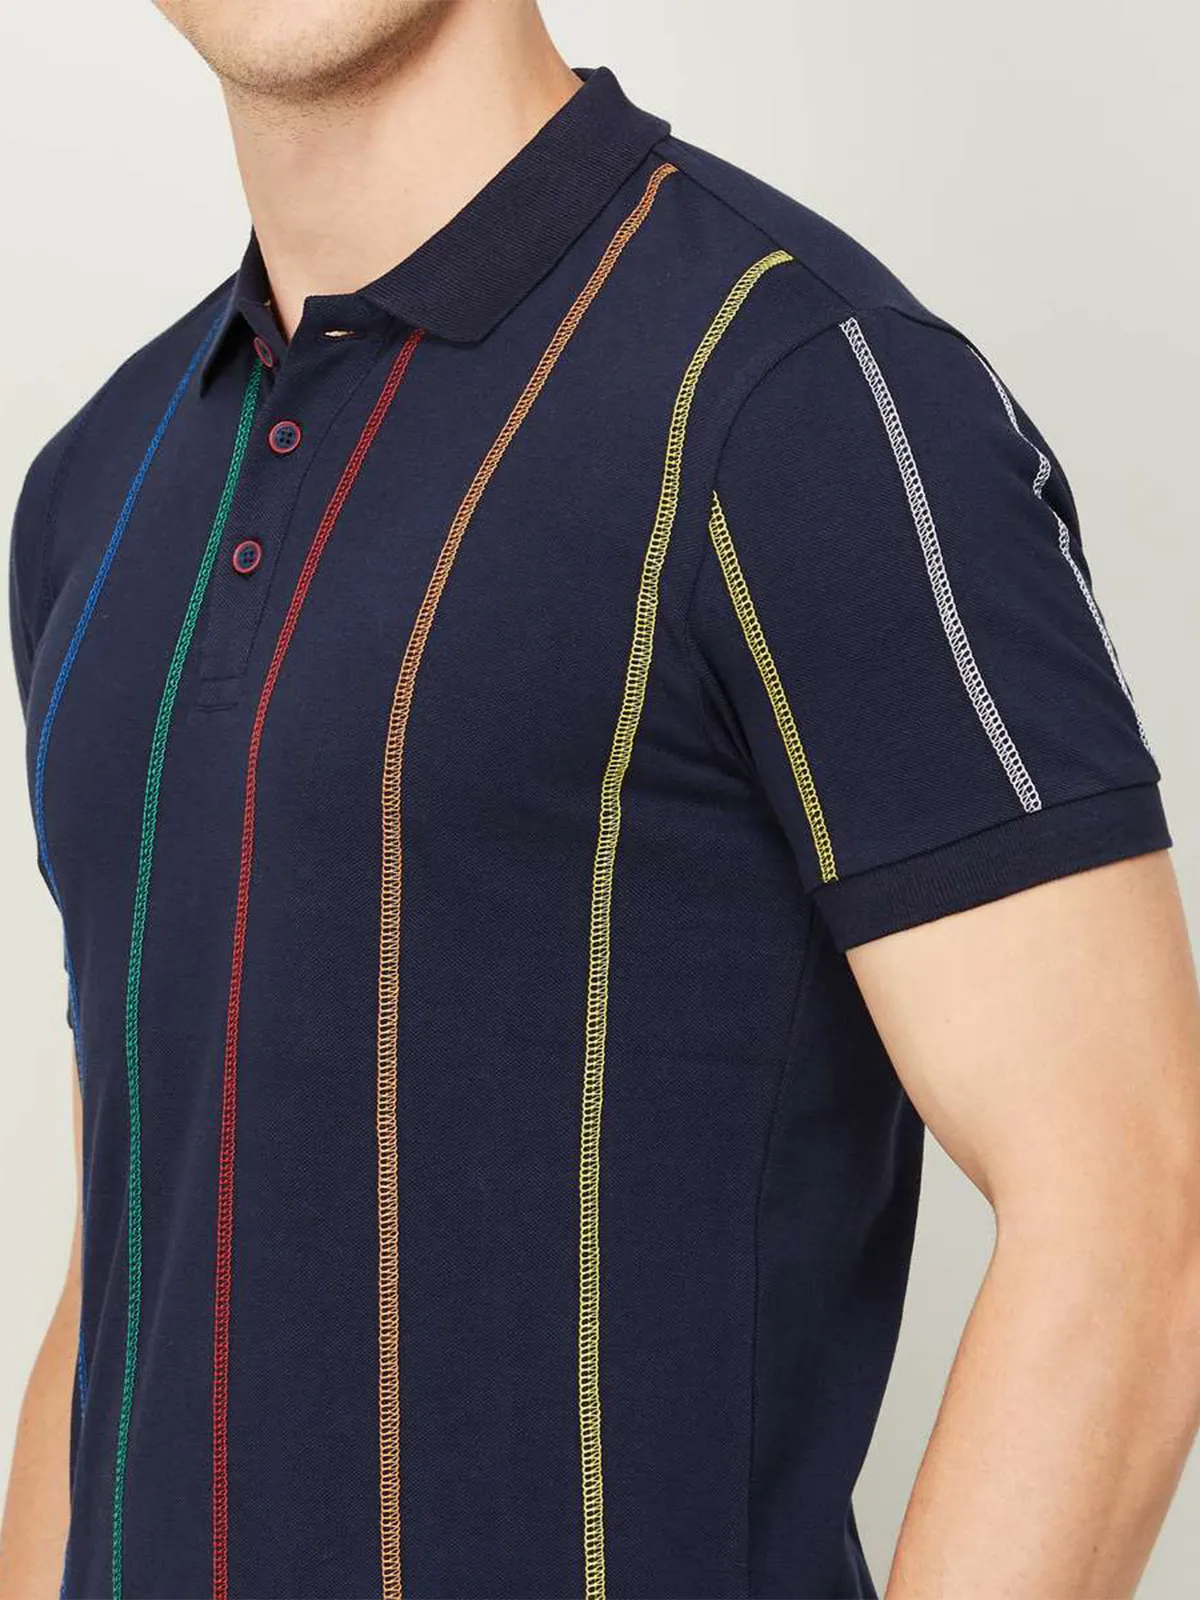 UCB cotton stripe slim fit navy t shirt